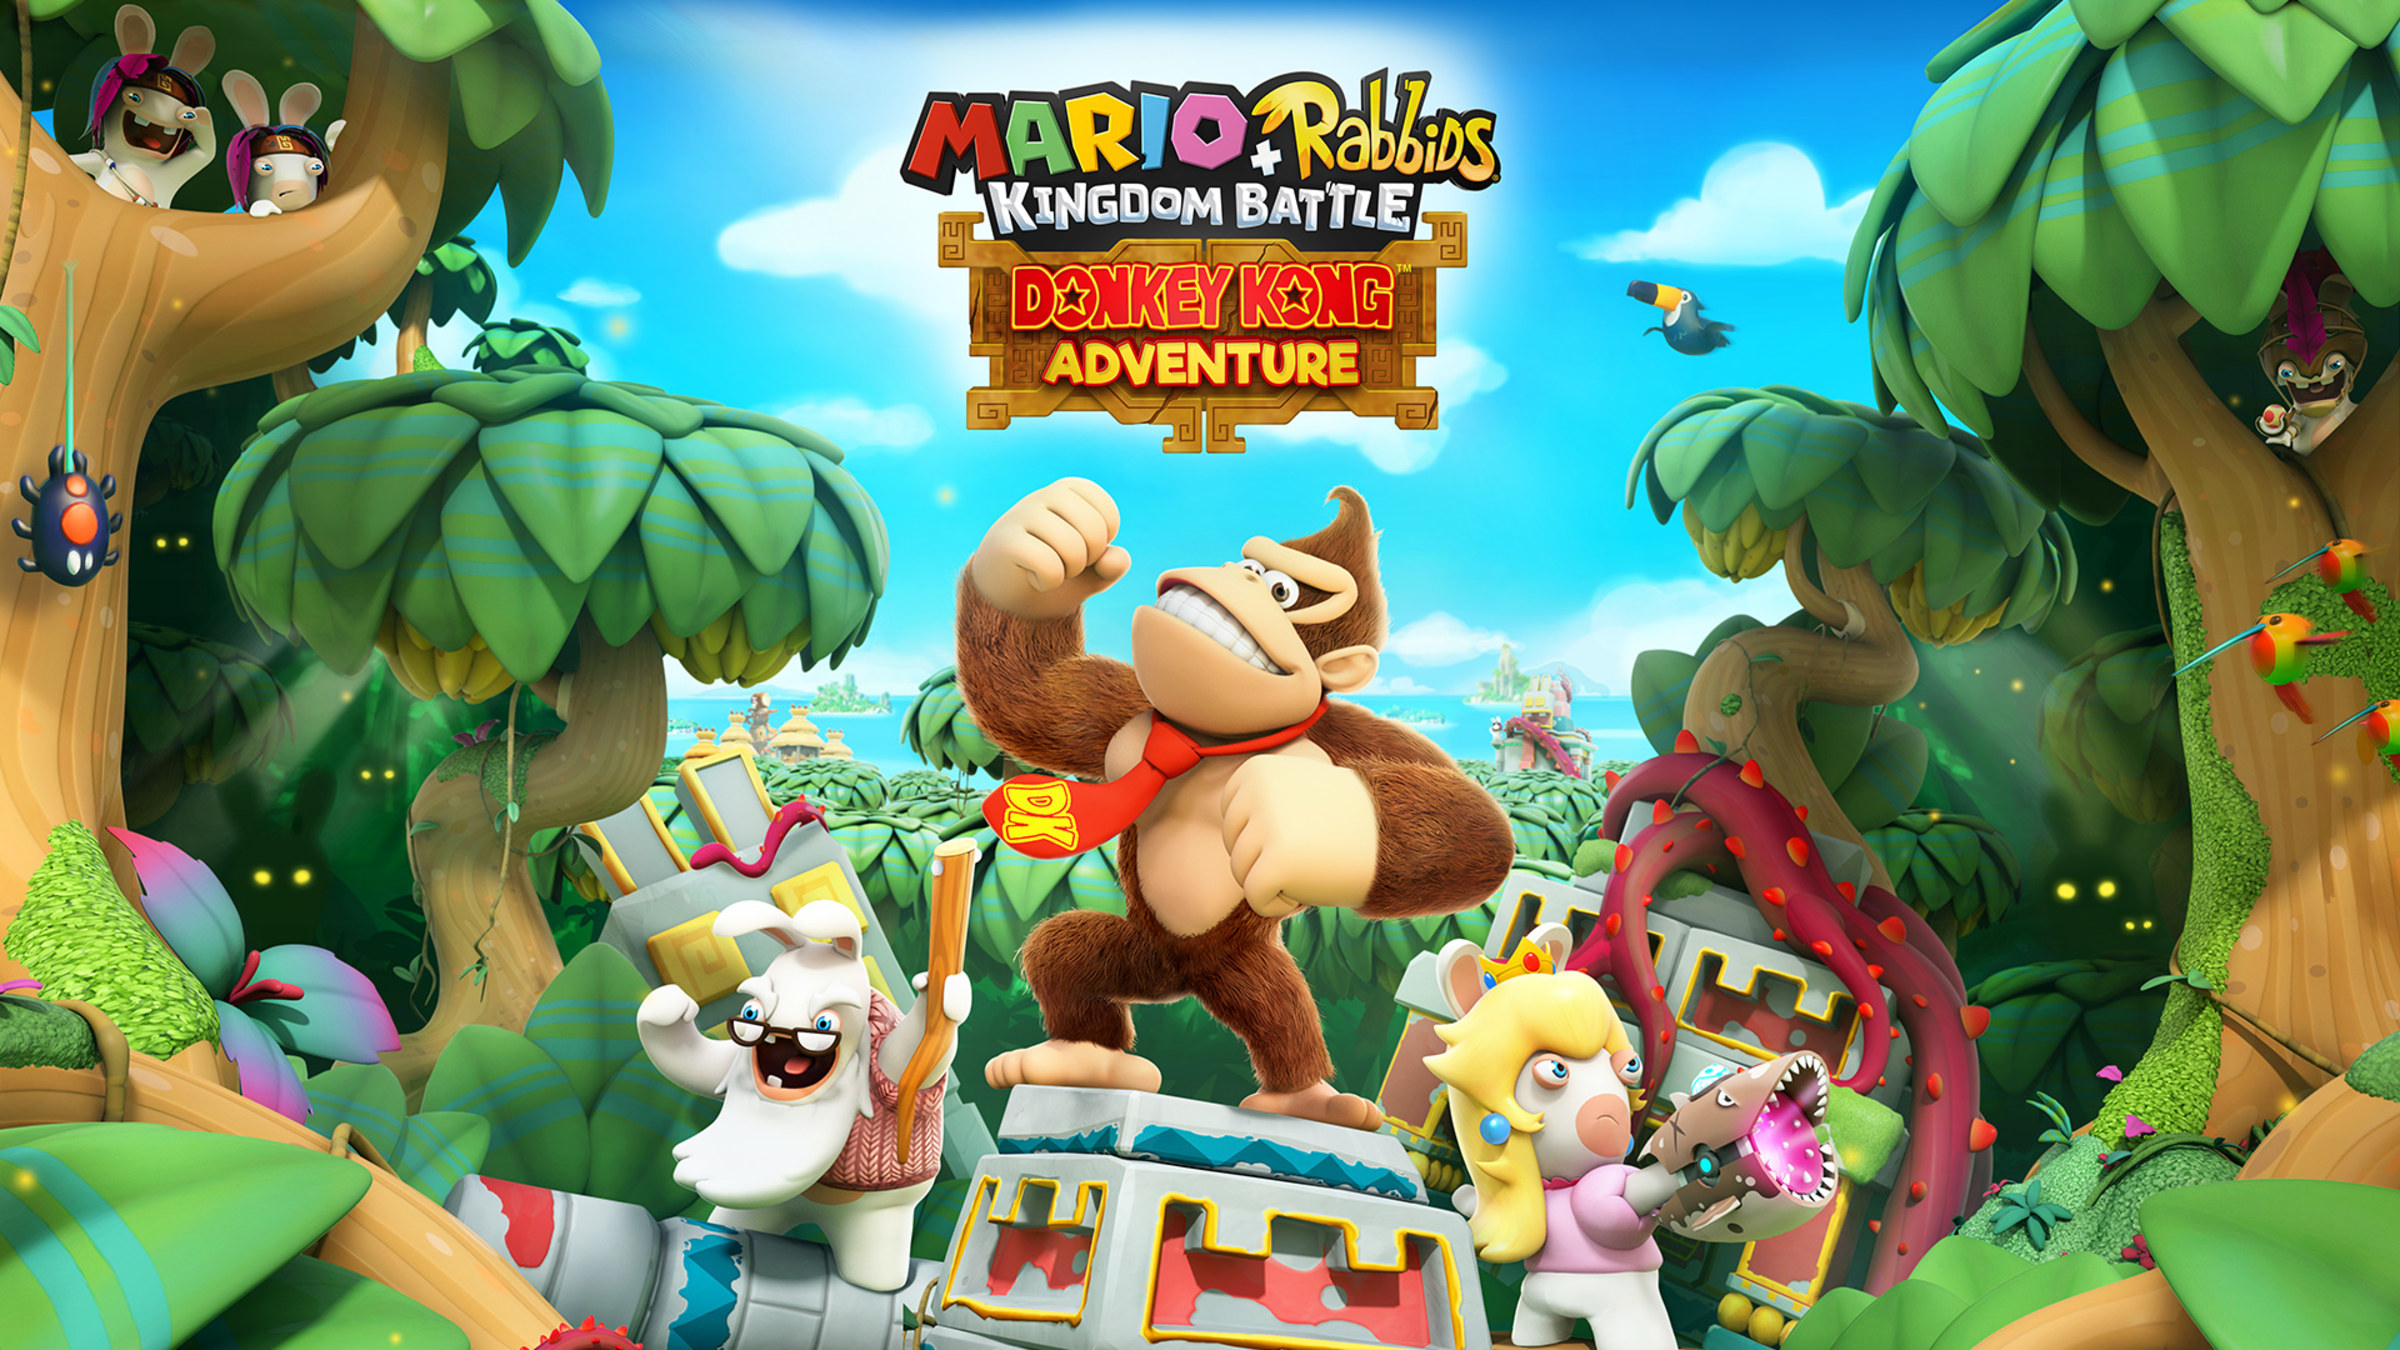 Mario + Rabbids® Kingdom Battle Donkey Kong Adventure for Nintendo